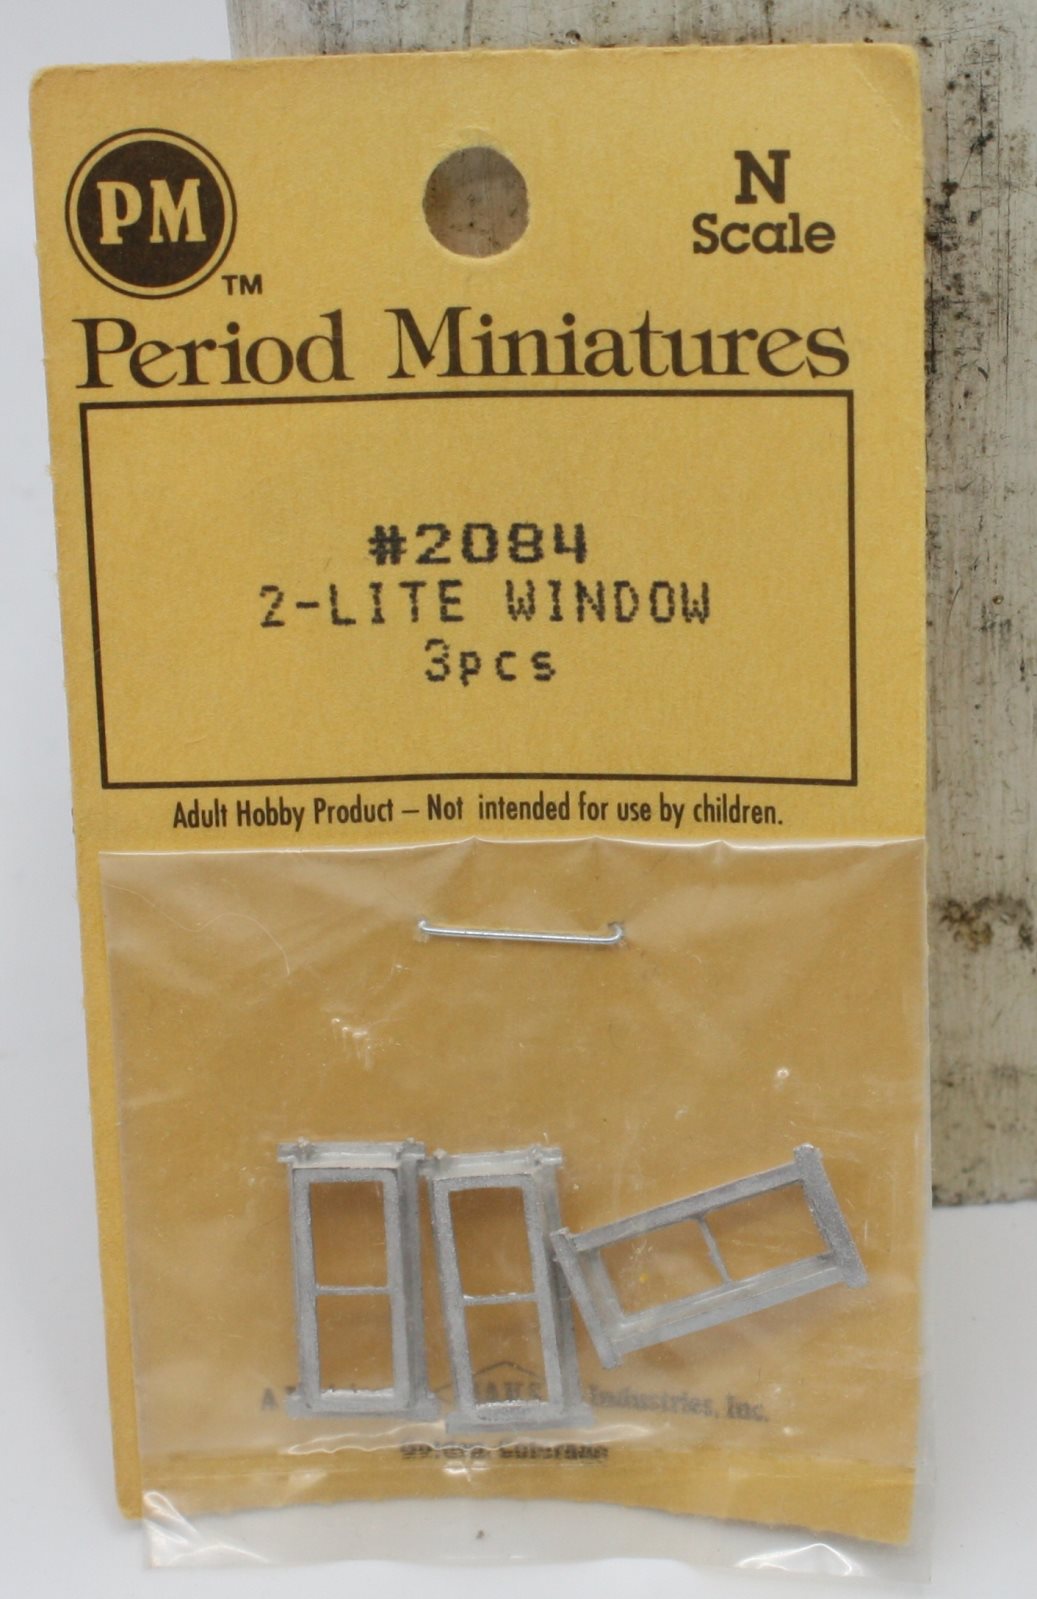 Period Miniatures 2084 N Scale 2-Lite Window